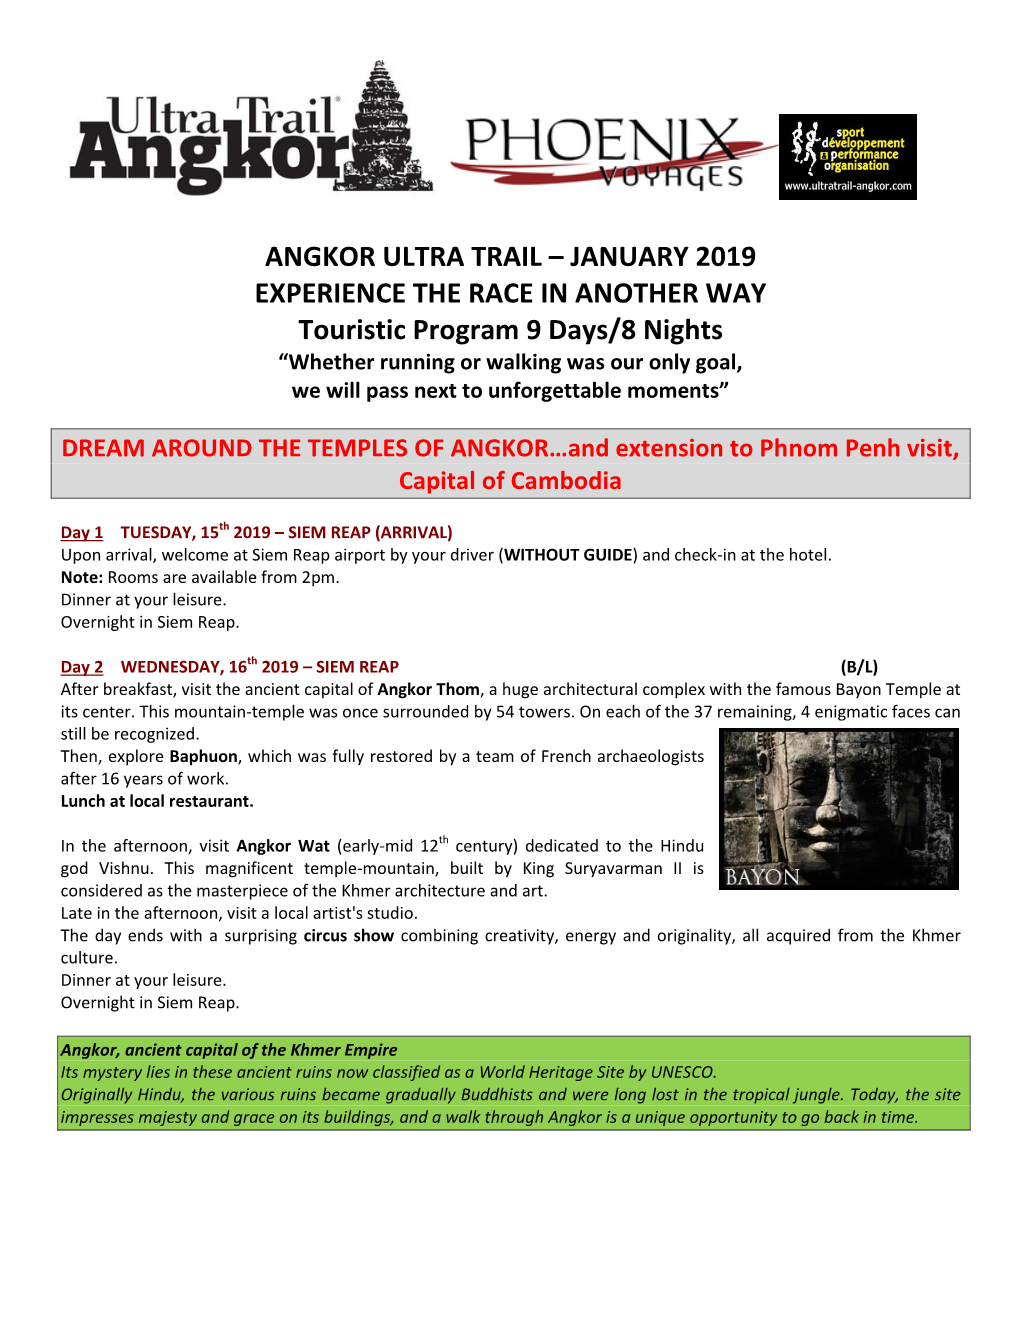 Angkor Ultra Trail – January 2019 Experience The